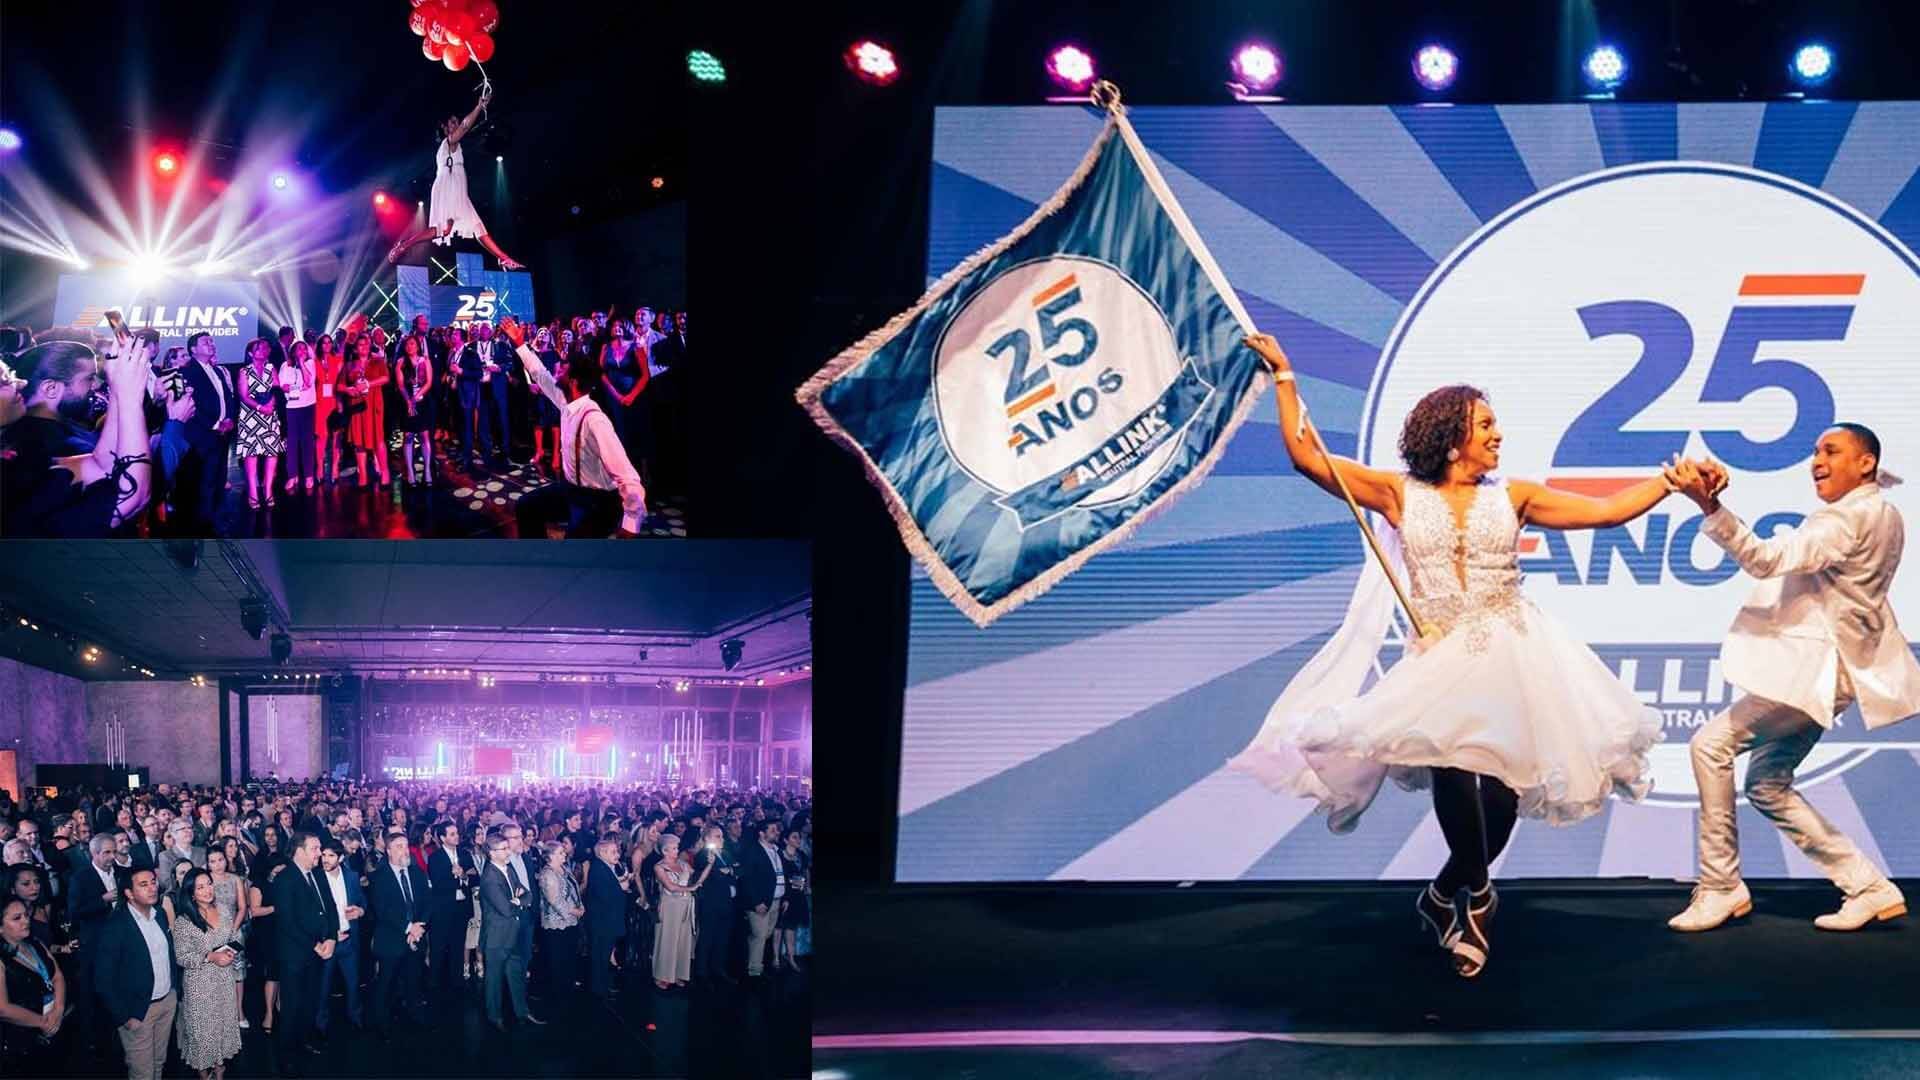 Allink celebra 25 anos de atividades - Allink Neutral Provider